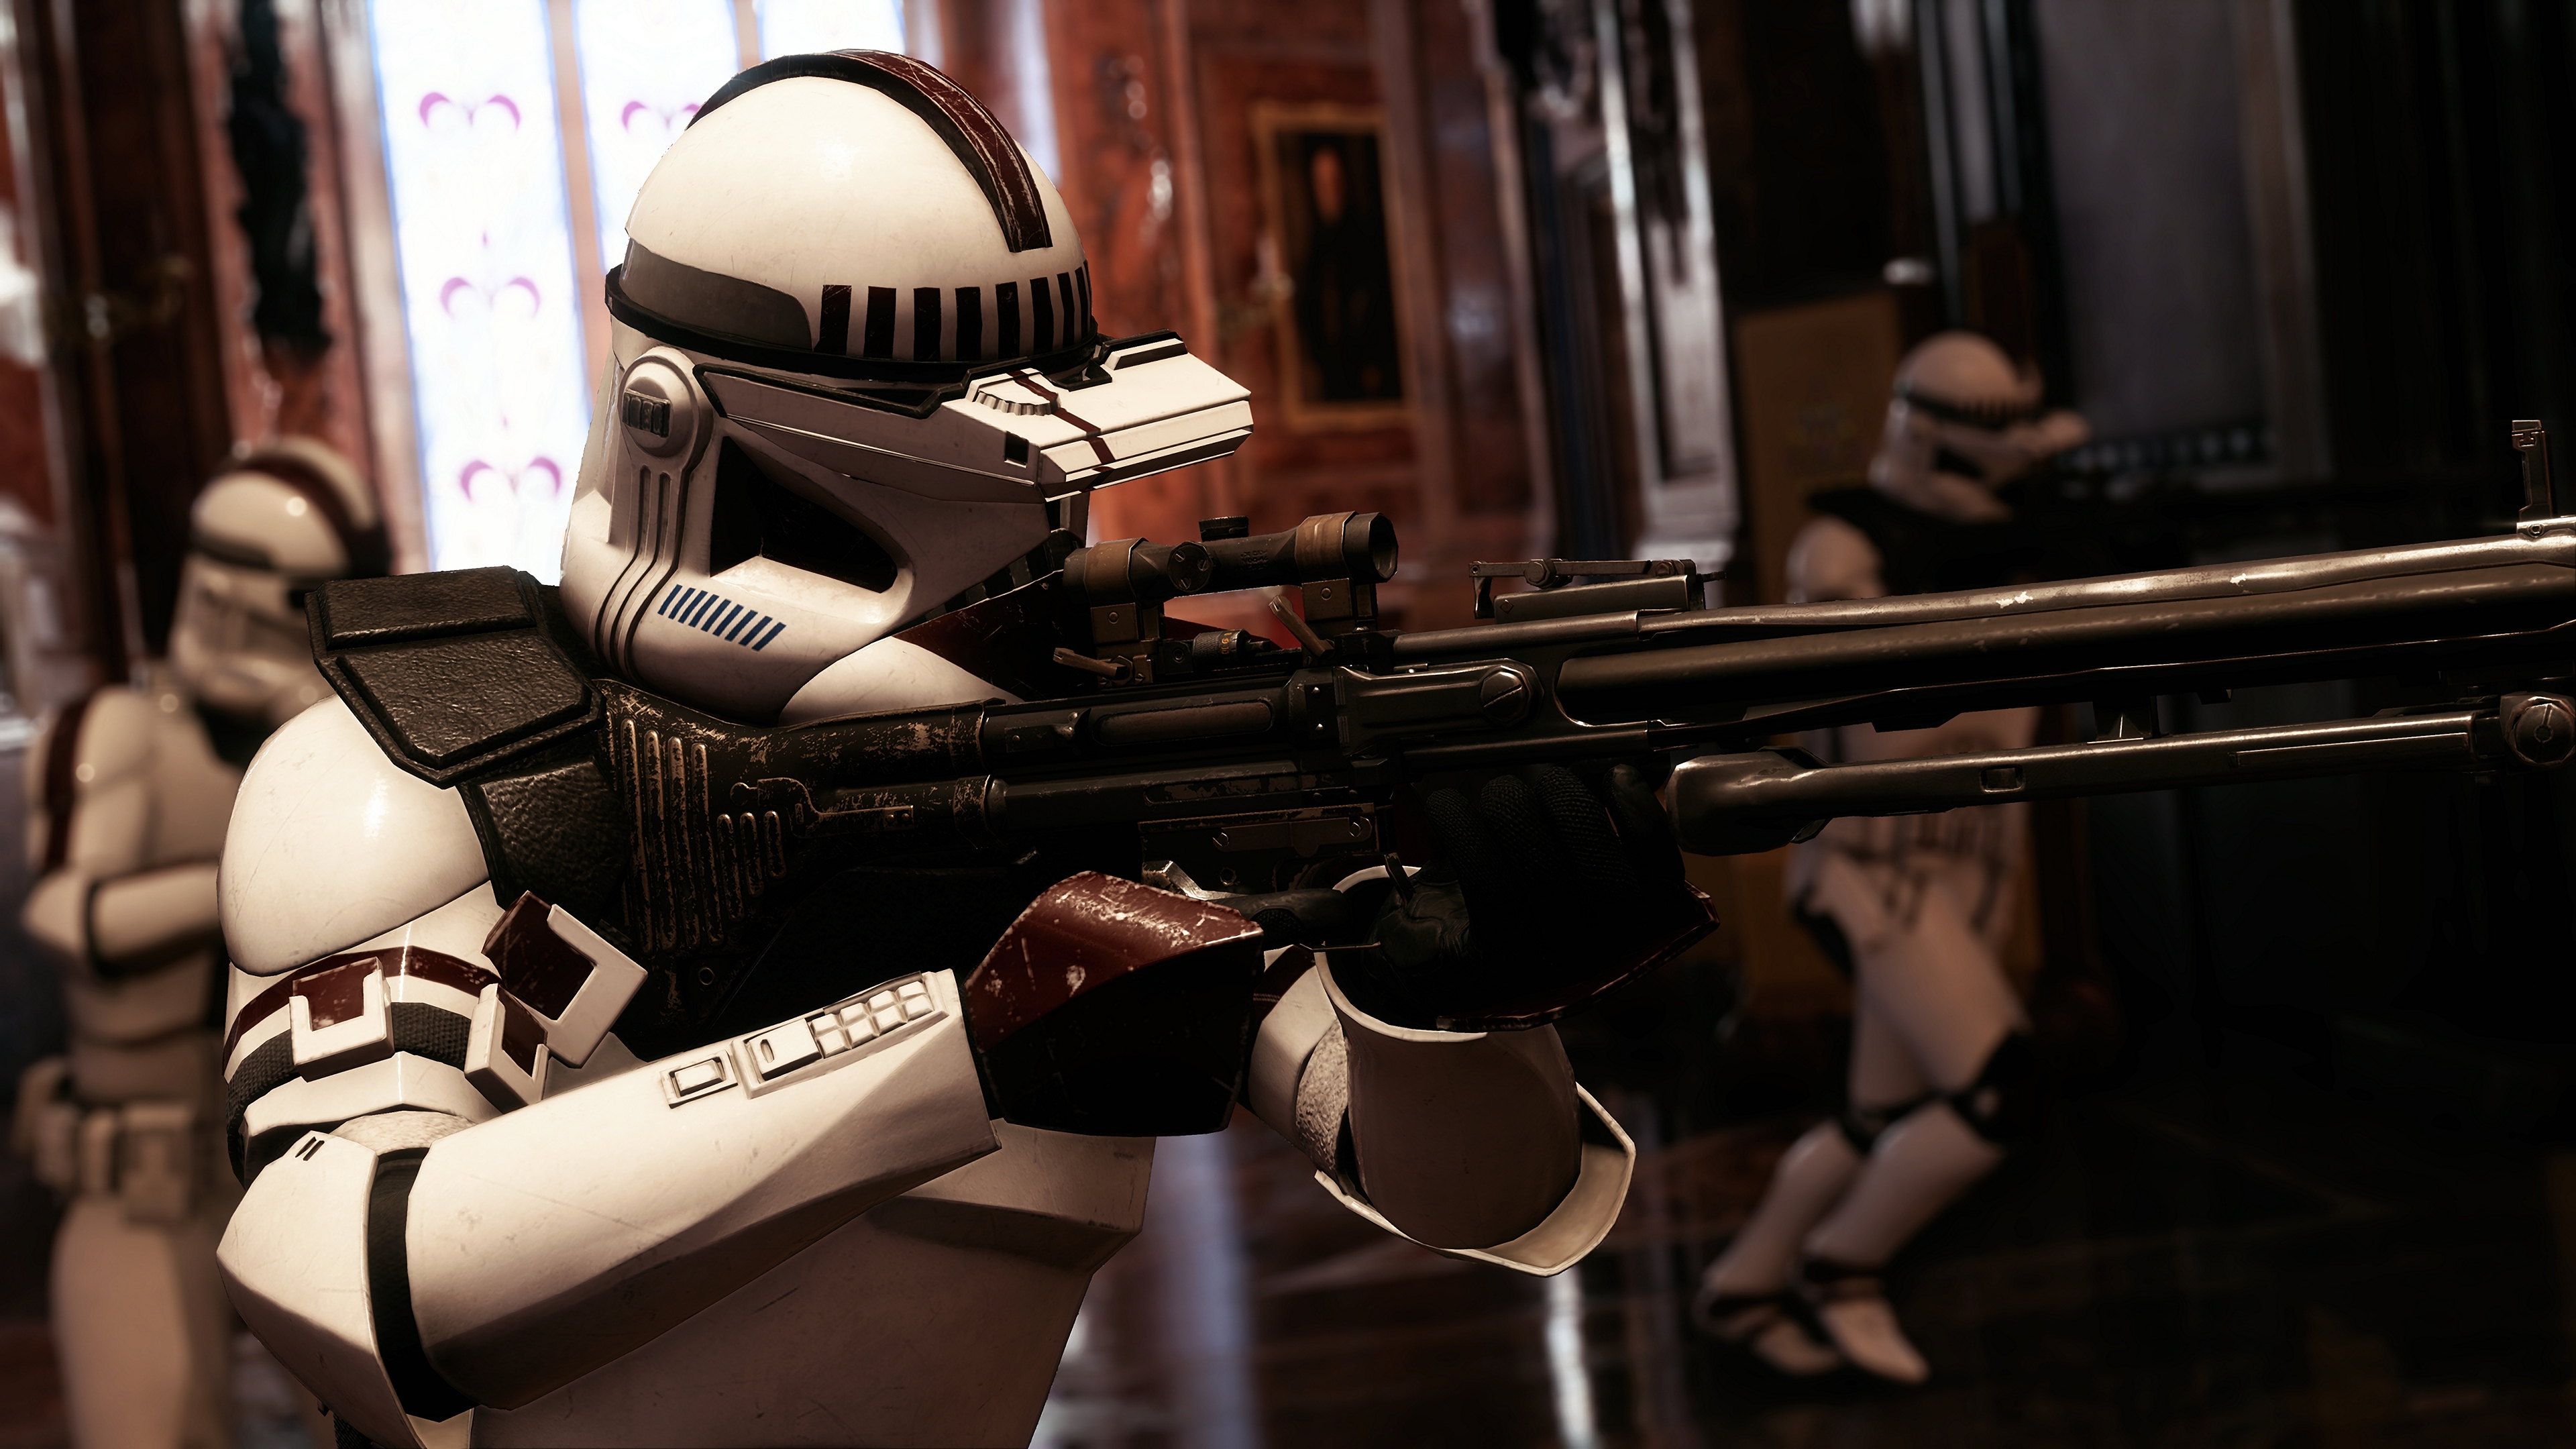 General 3840x2160 Star Wars Battlefront II Star Wars video games clone trooper sniper rifle